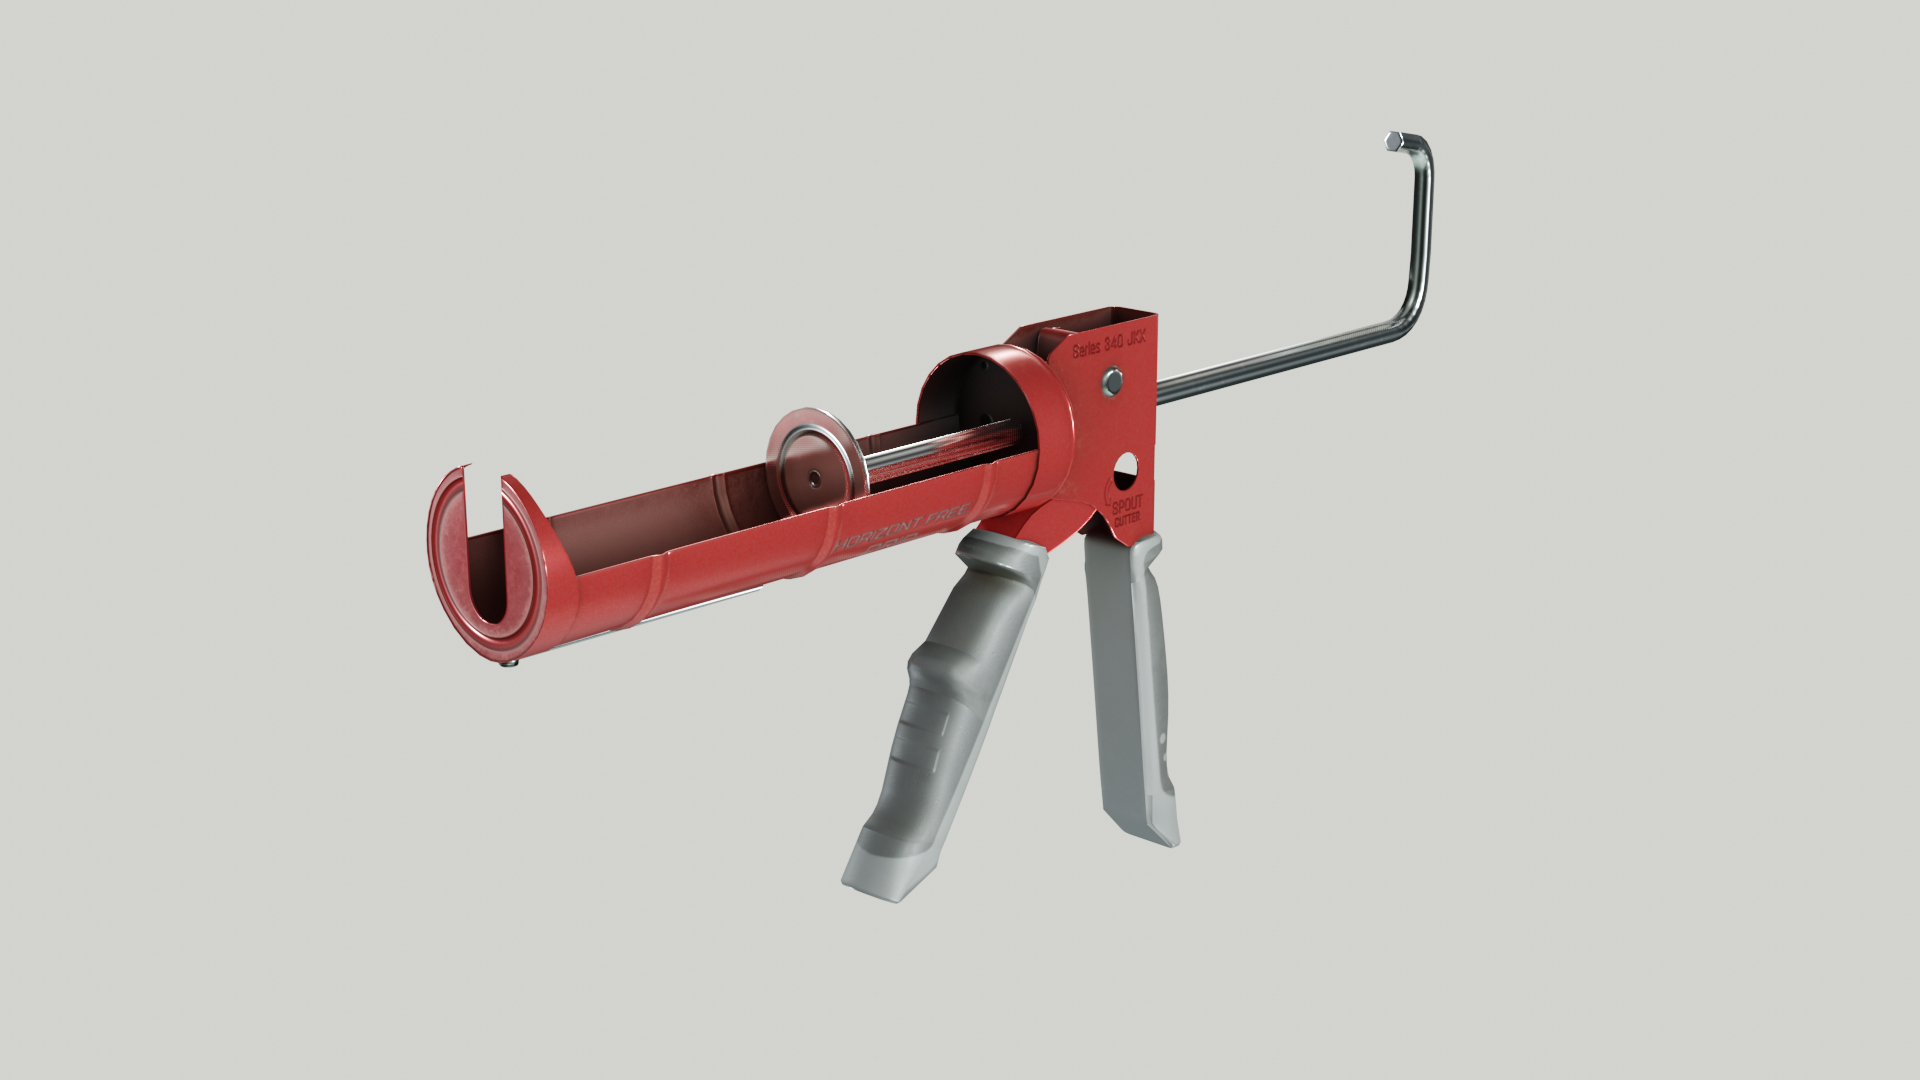 3D Hand Caulking Gun Model - TurboSquid 1758905